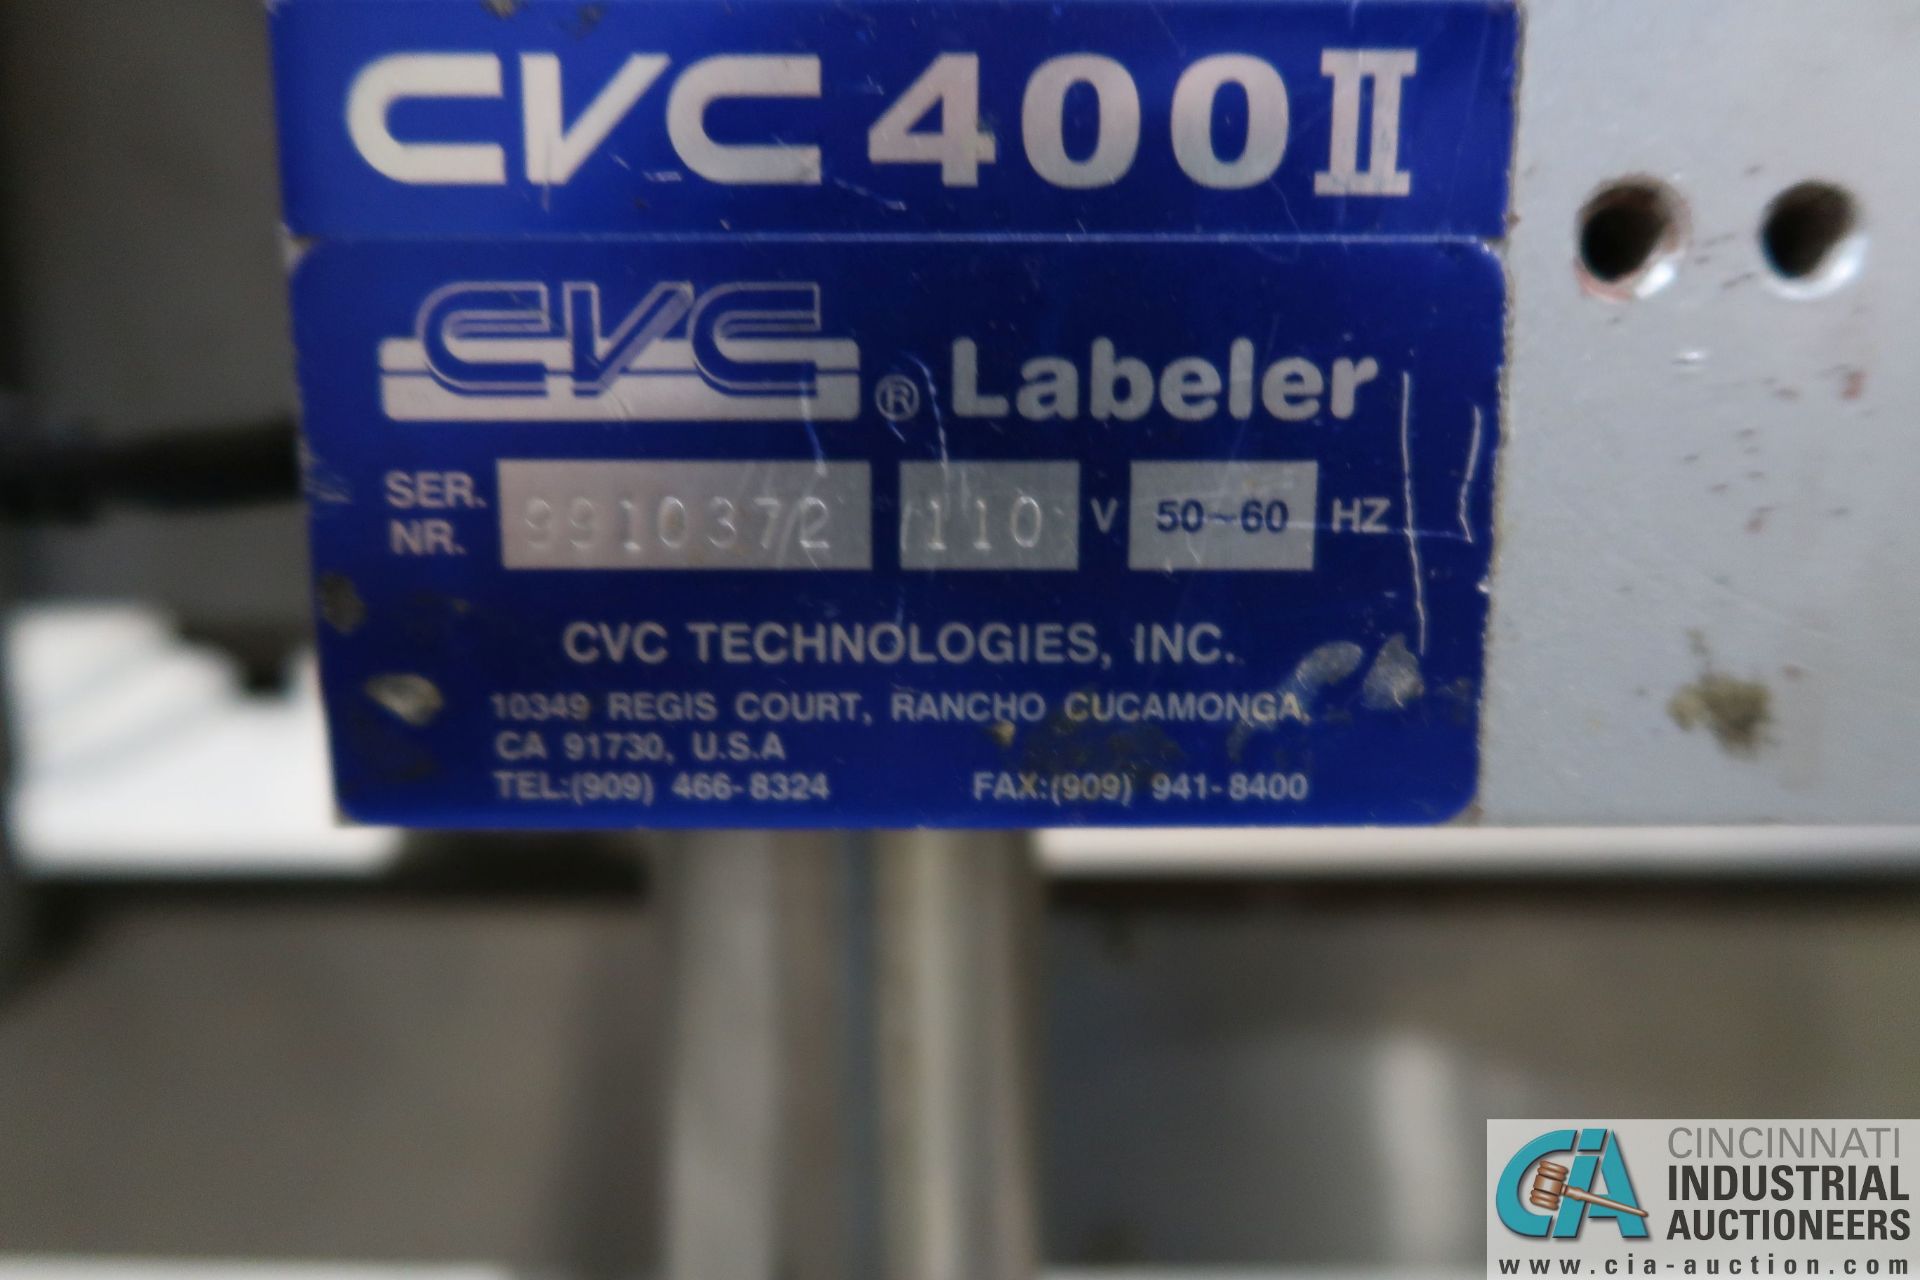 CVC TECHNOLOGIES MODEL CVC 400 II LABLER; S/N 9910372 - Bild 8 aus 8